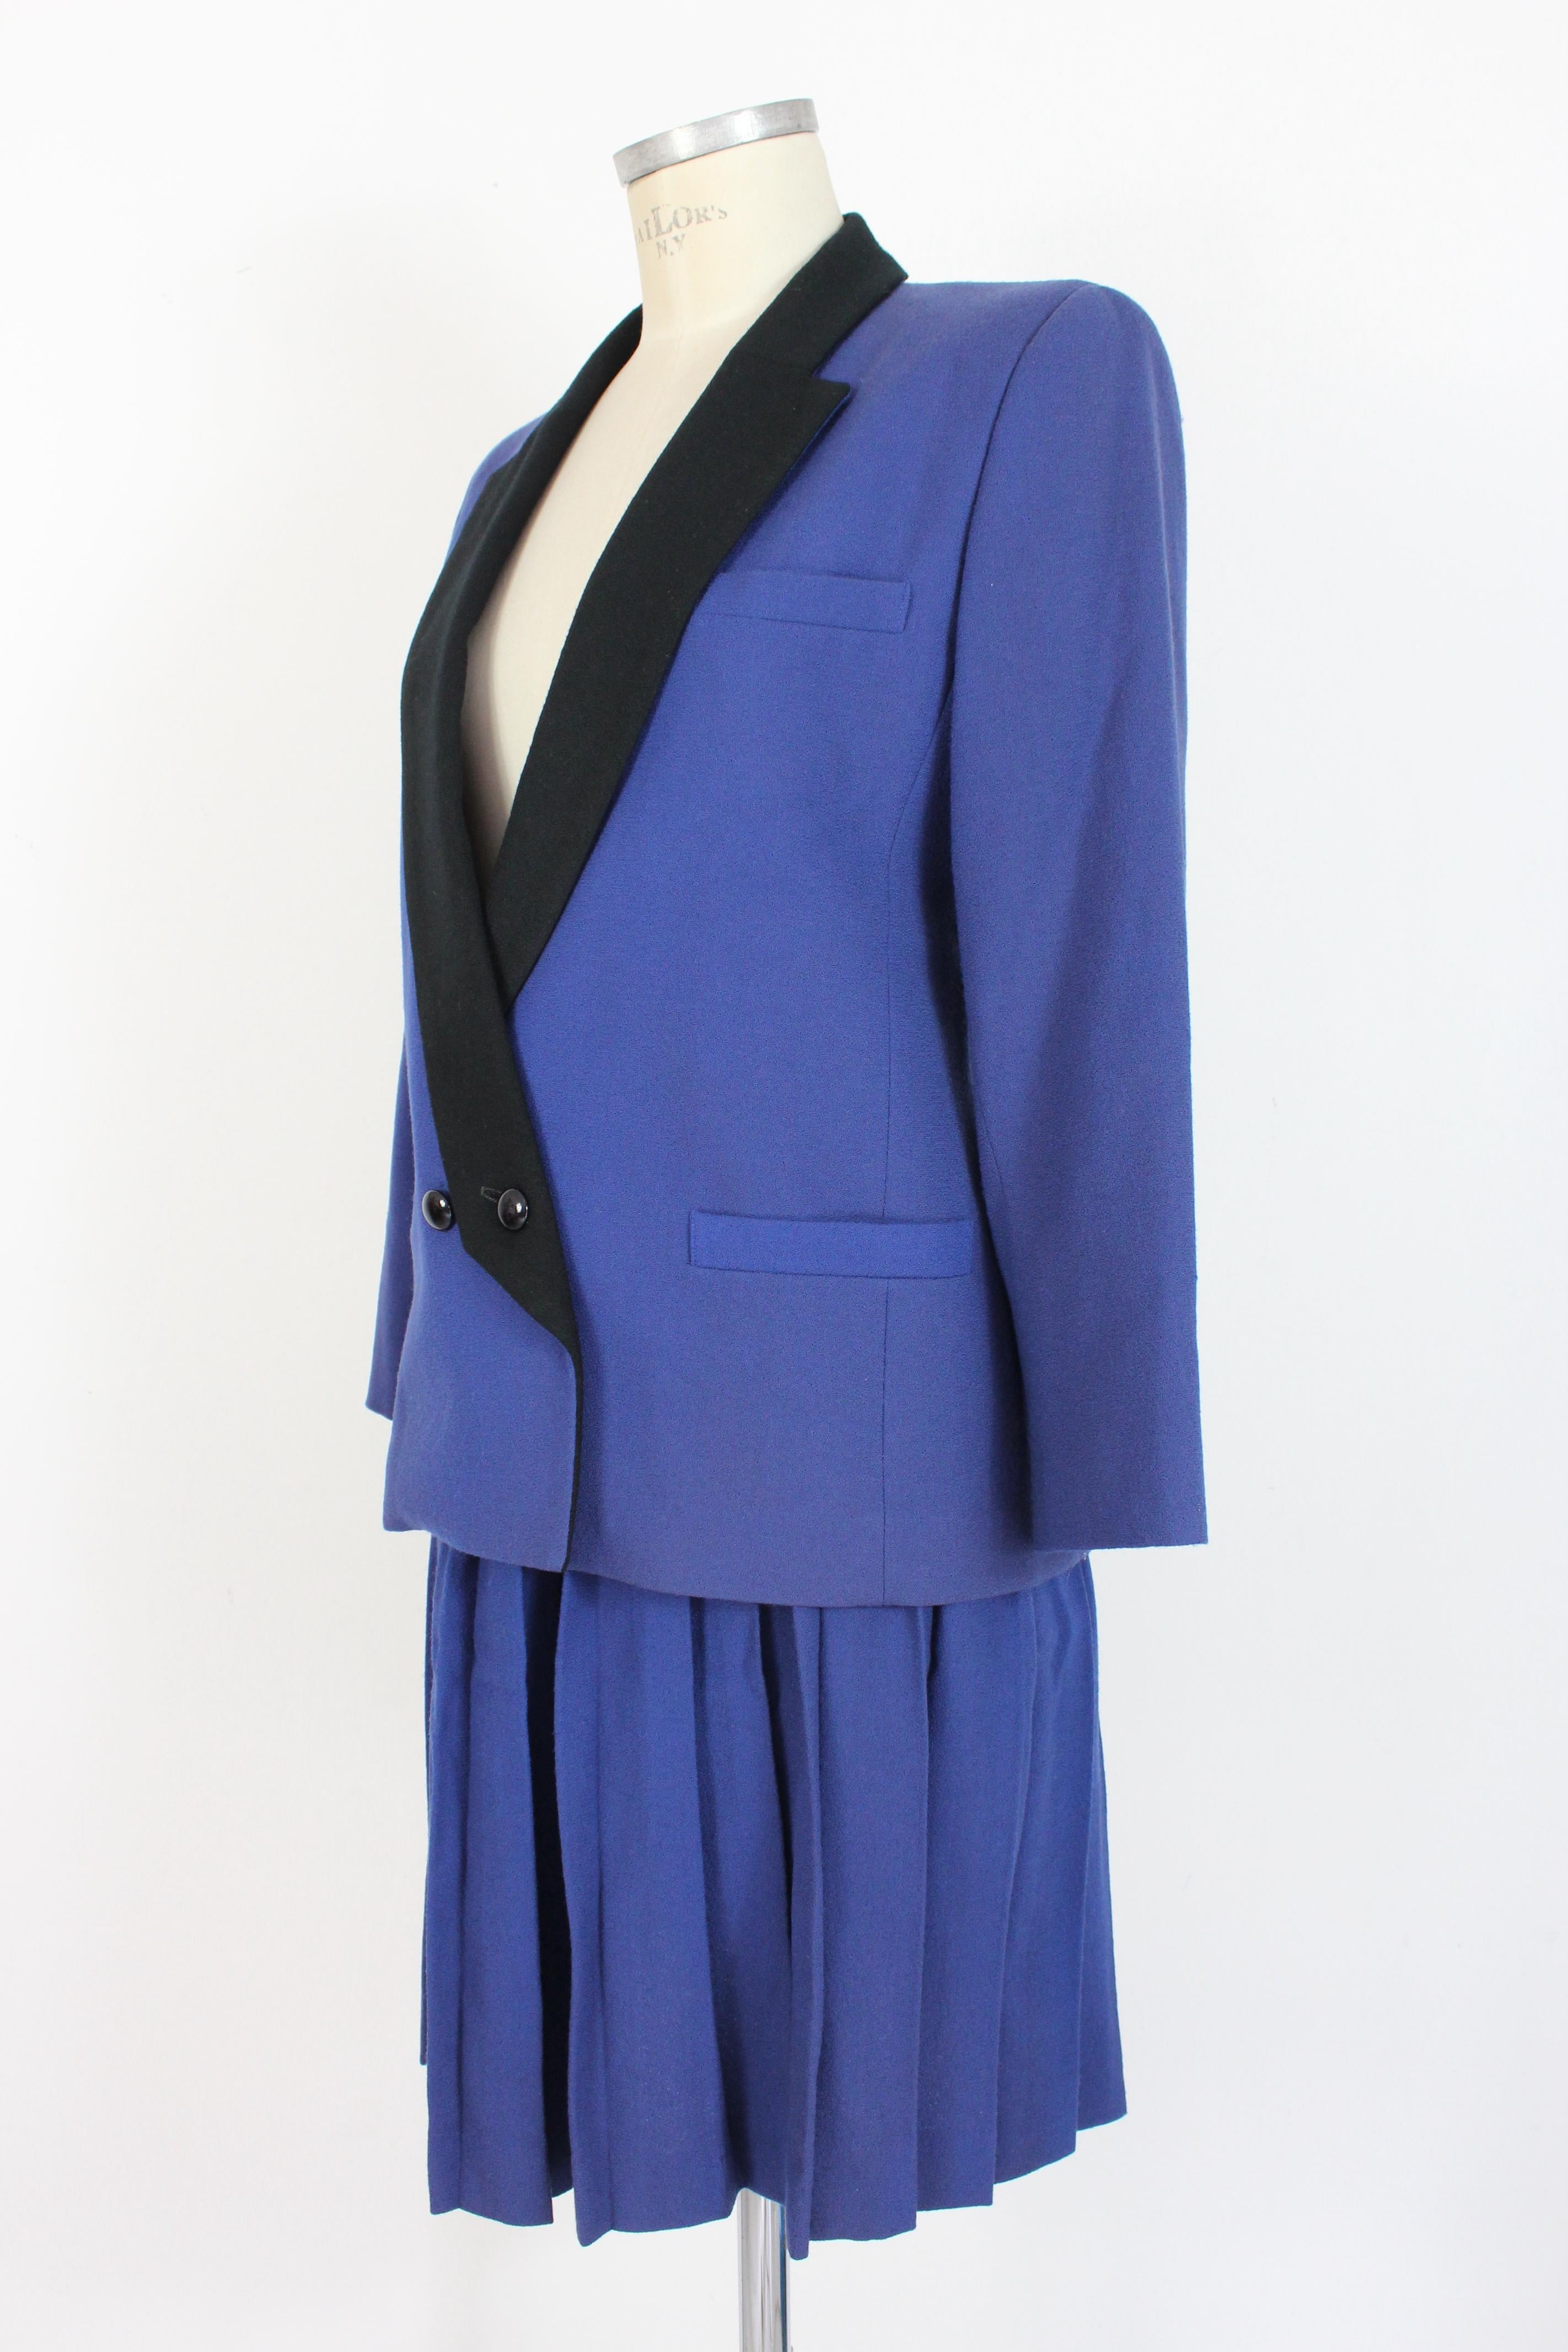 Women's Oleg Cassini Blue Black Wool Pleated Evening Suit Skirt